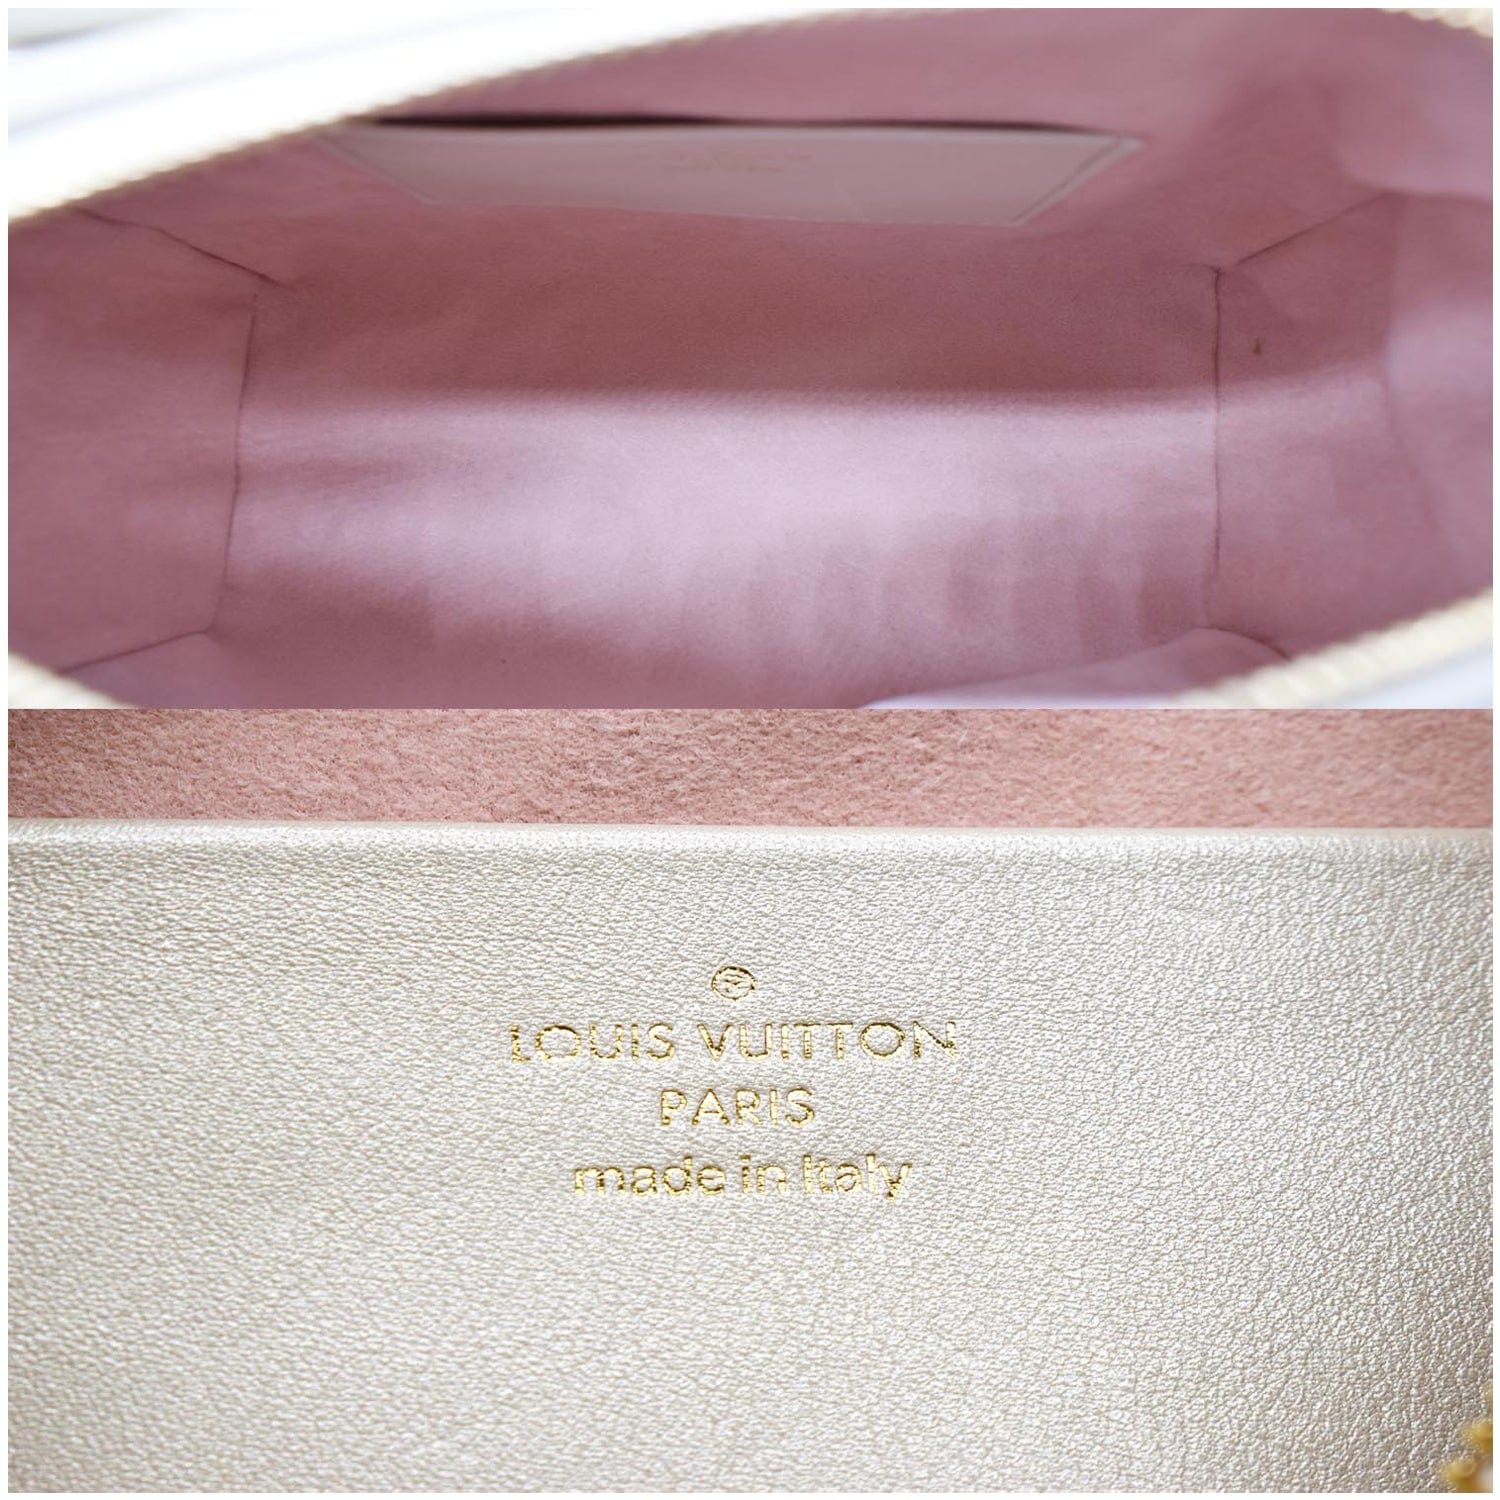 Louis Vuitton Speedy Edition limitée handbag in yellow and beige